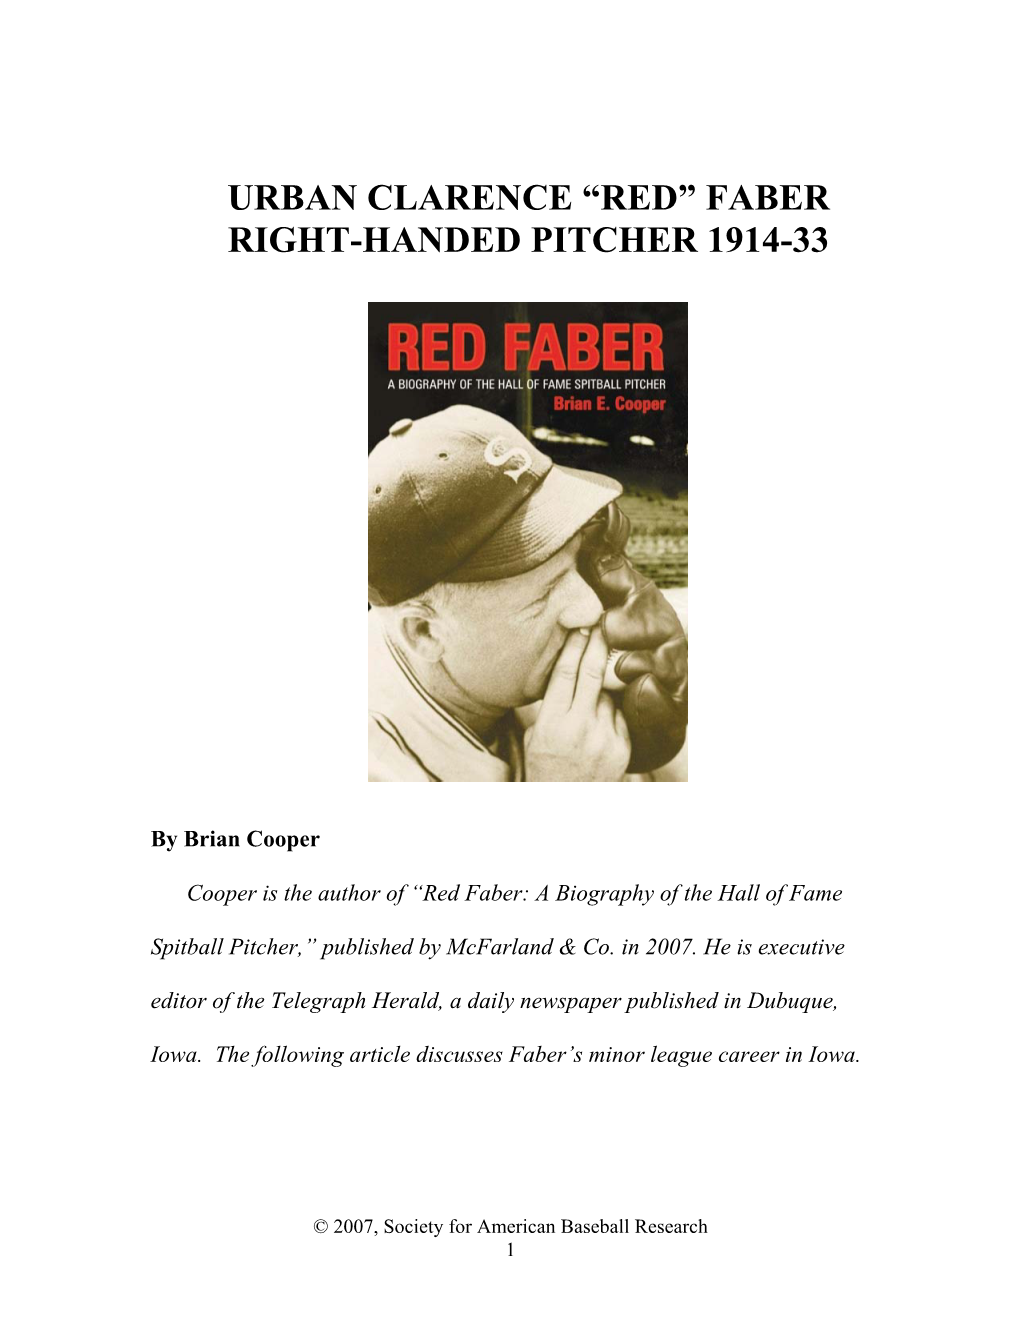 "Red" Faber (Chicago AL